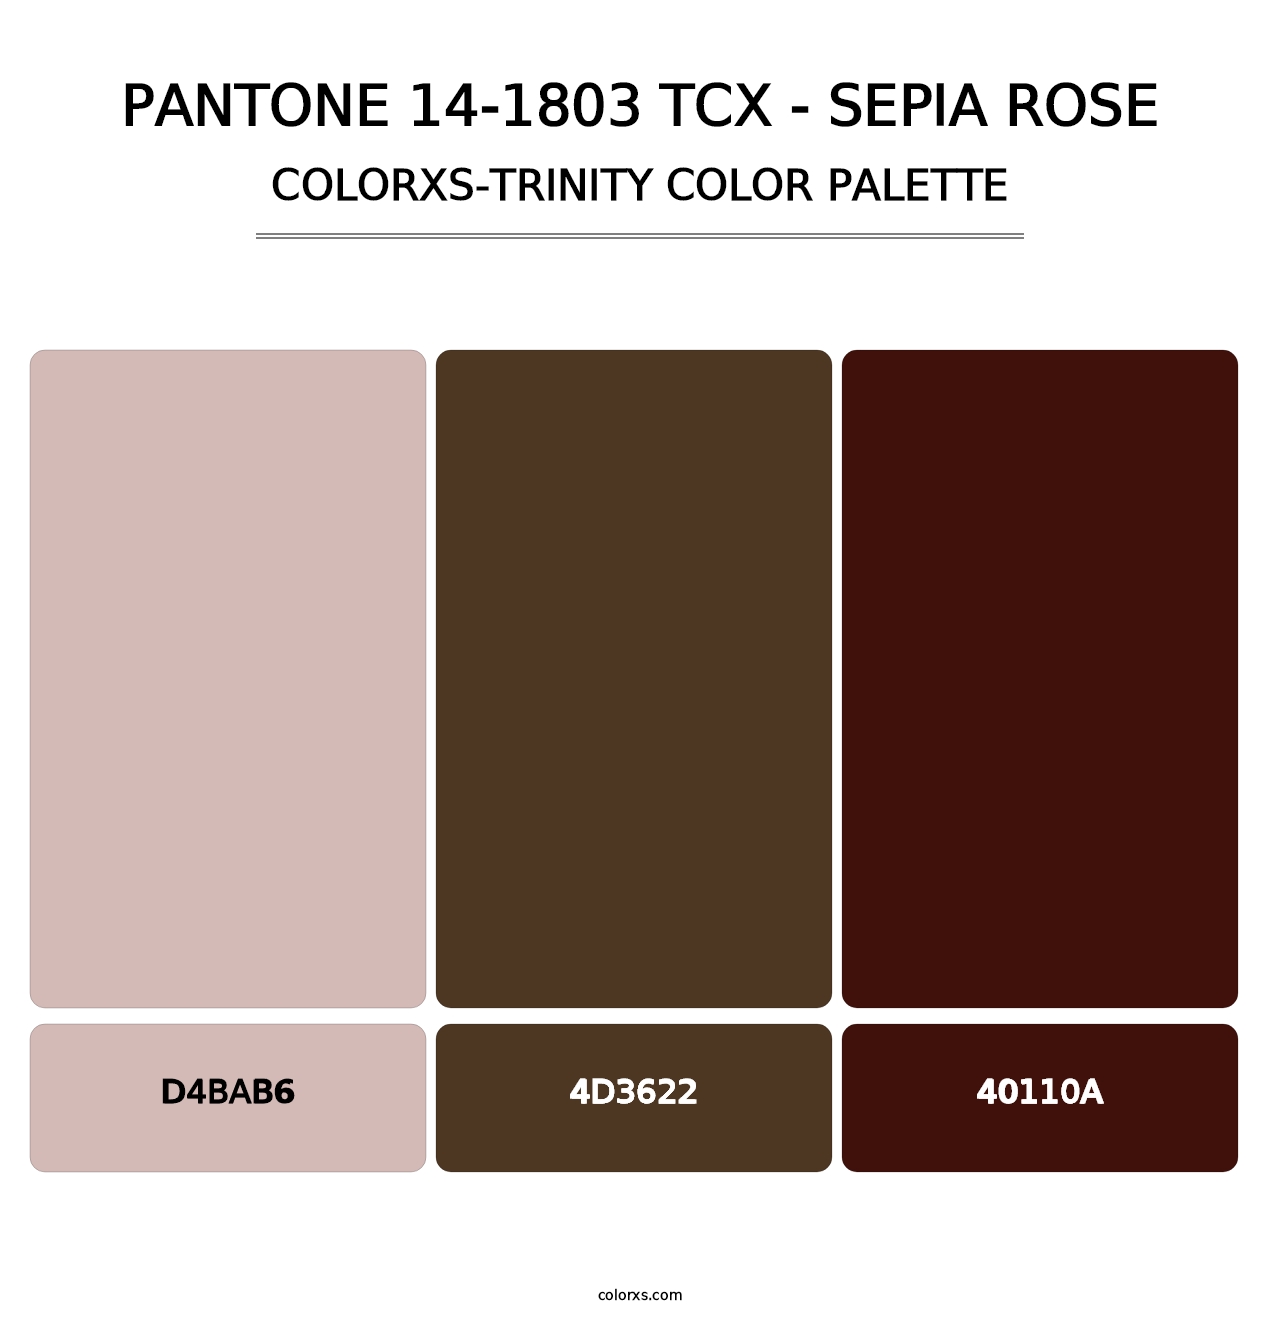 PANTONE 14-1803 TCX - Sepia Rose - Colorxs Trinity Palette